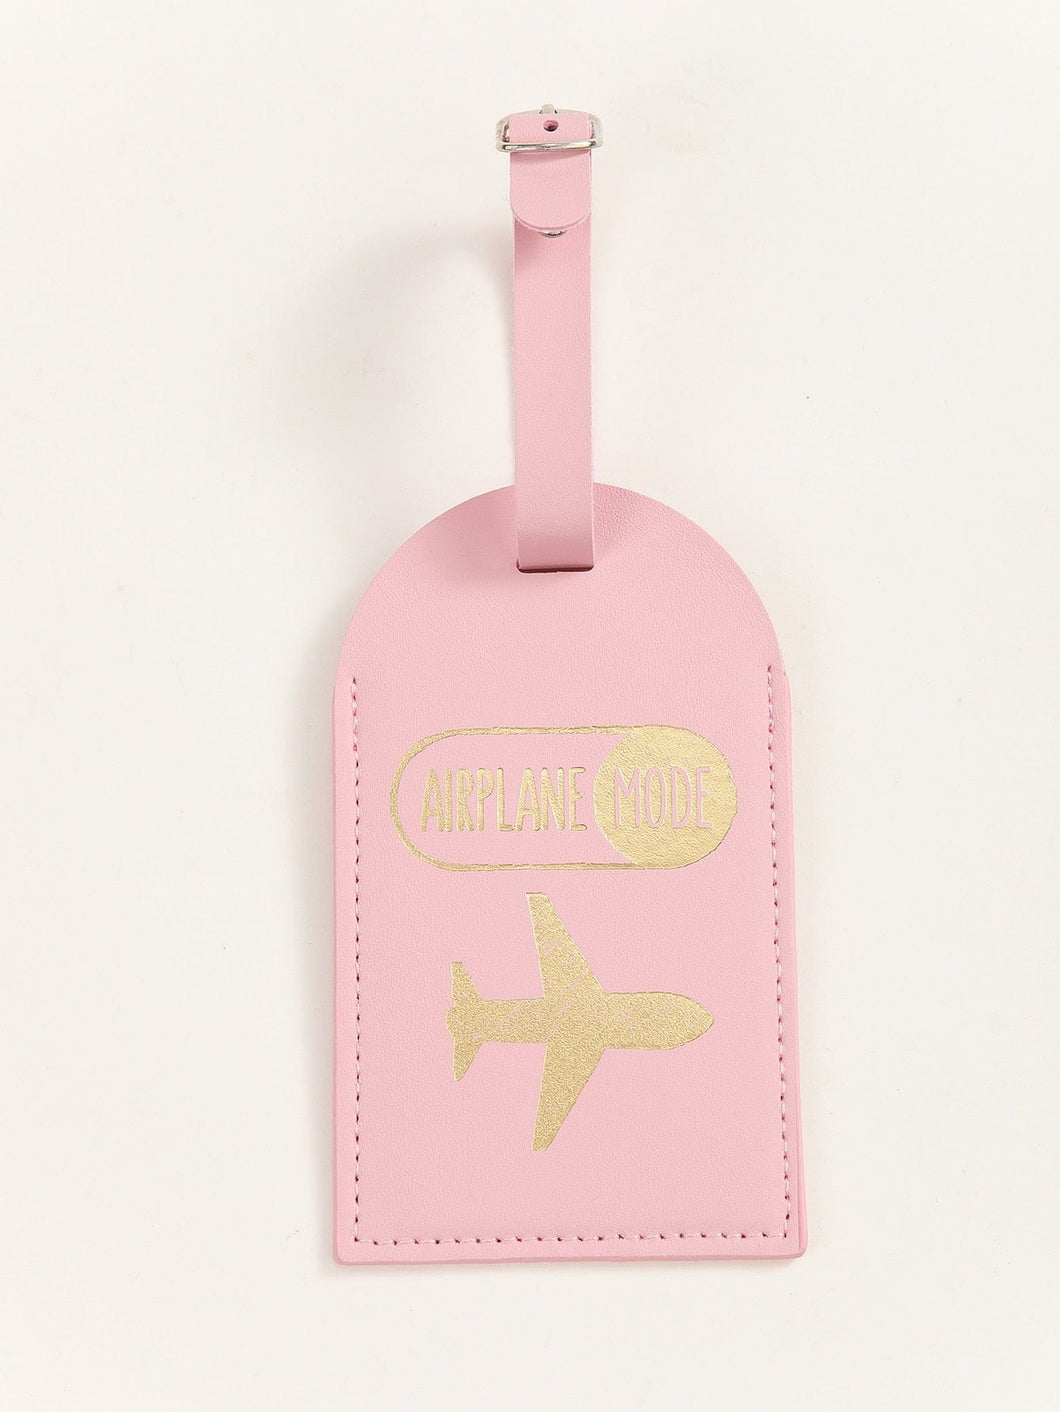 Pink airplane mode luggage tag